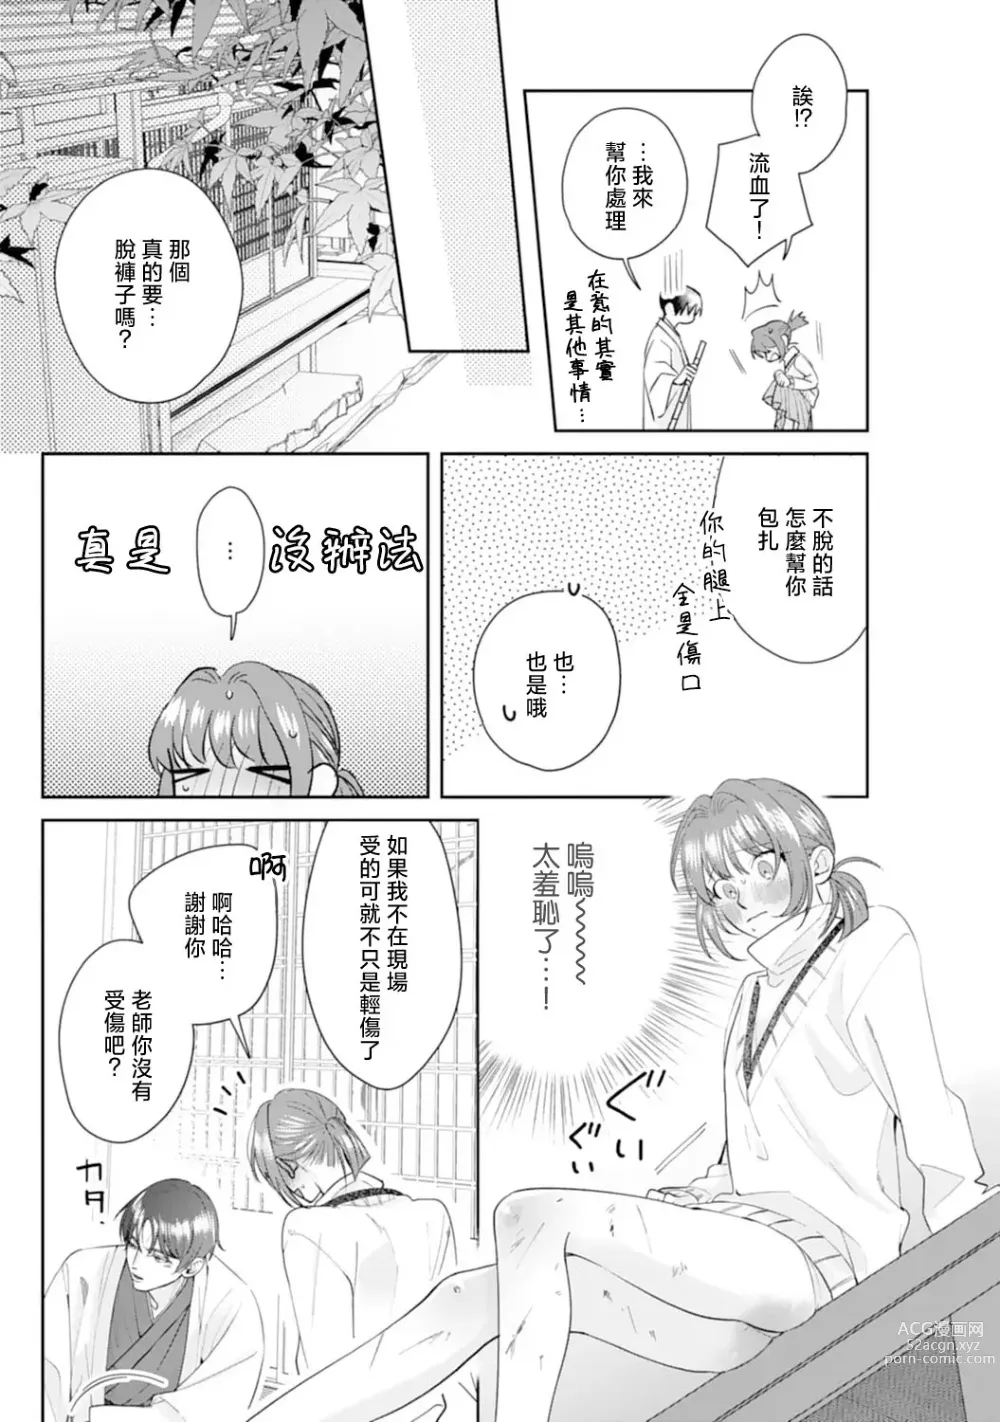 Page 53 of manga 浅叶老师专一的纯爱 1-2